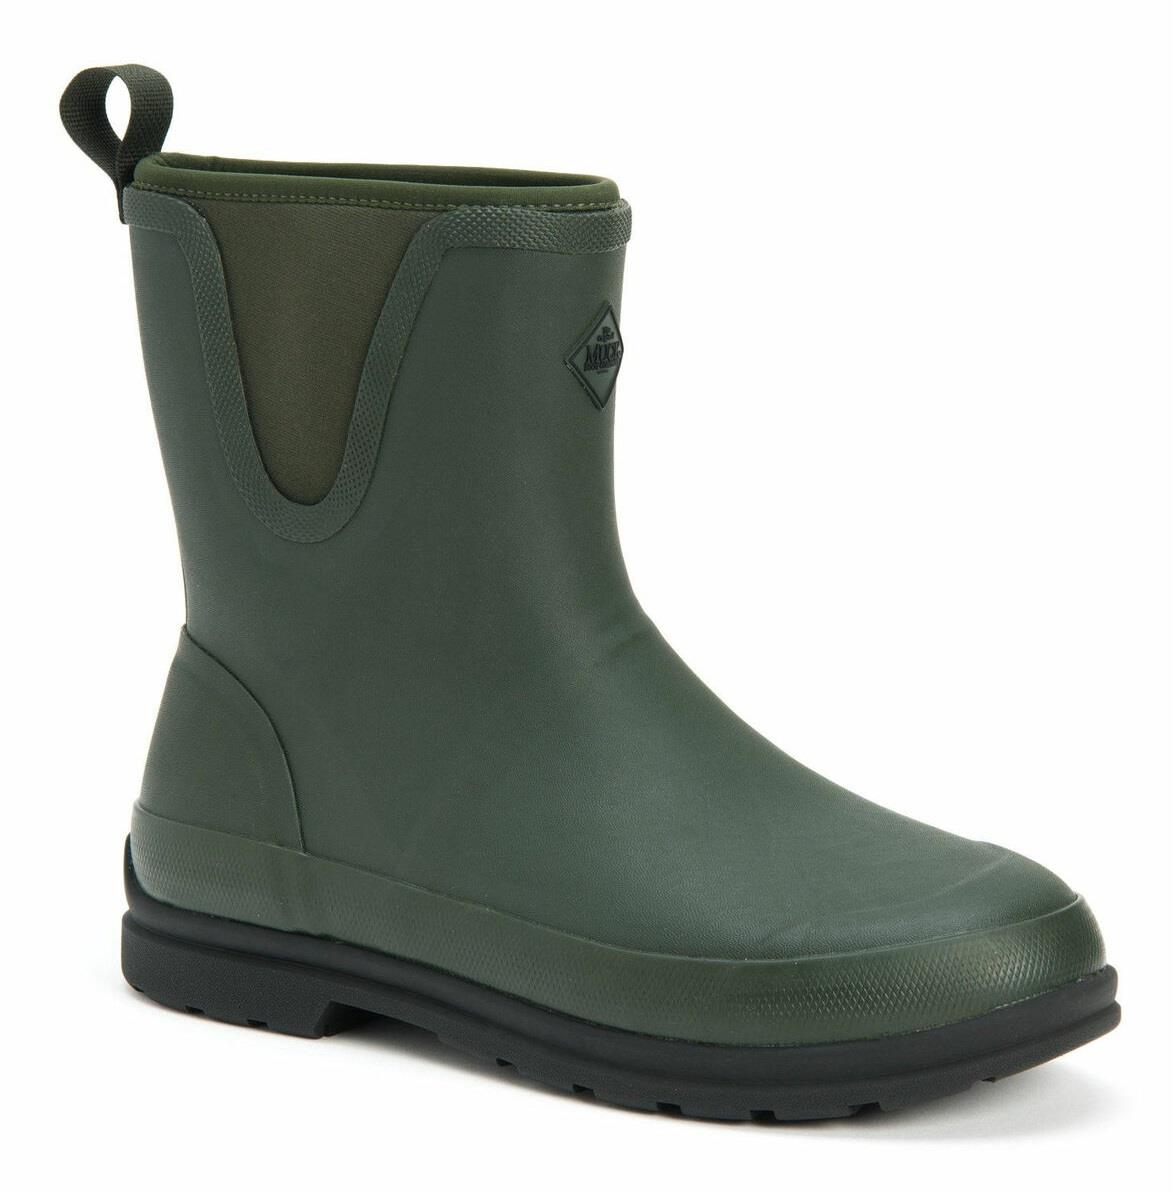 Muck Boots Originals moss green waterproof pull on mid length wellington boots